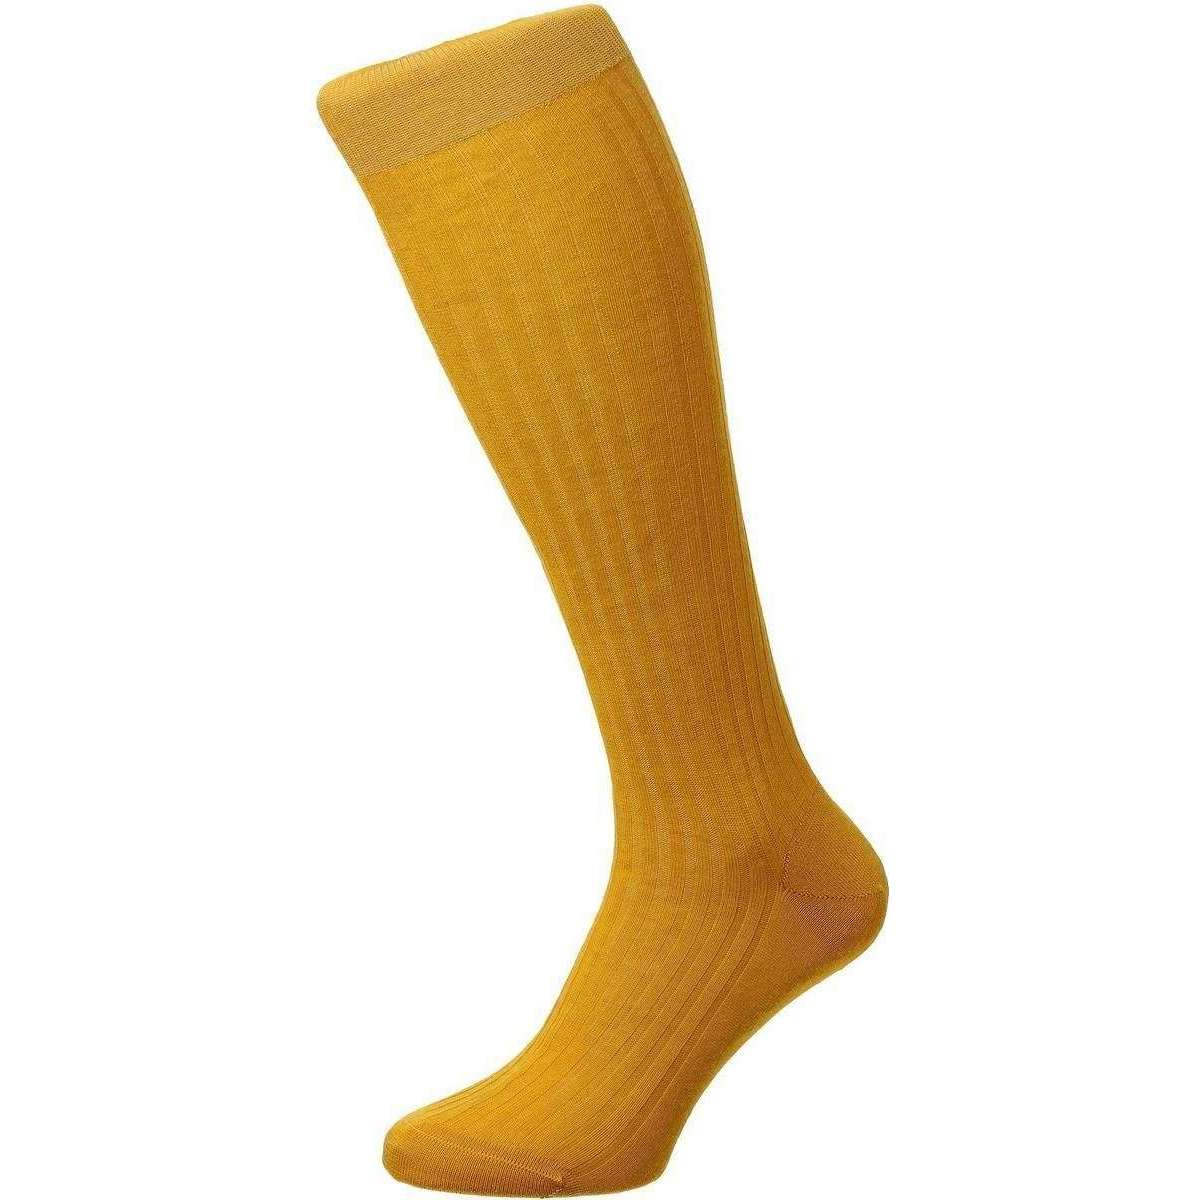 Pantherella Laburnum Merino Wool Over the Calf Socks - Bright Gold